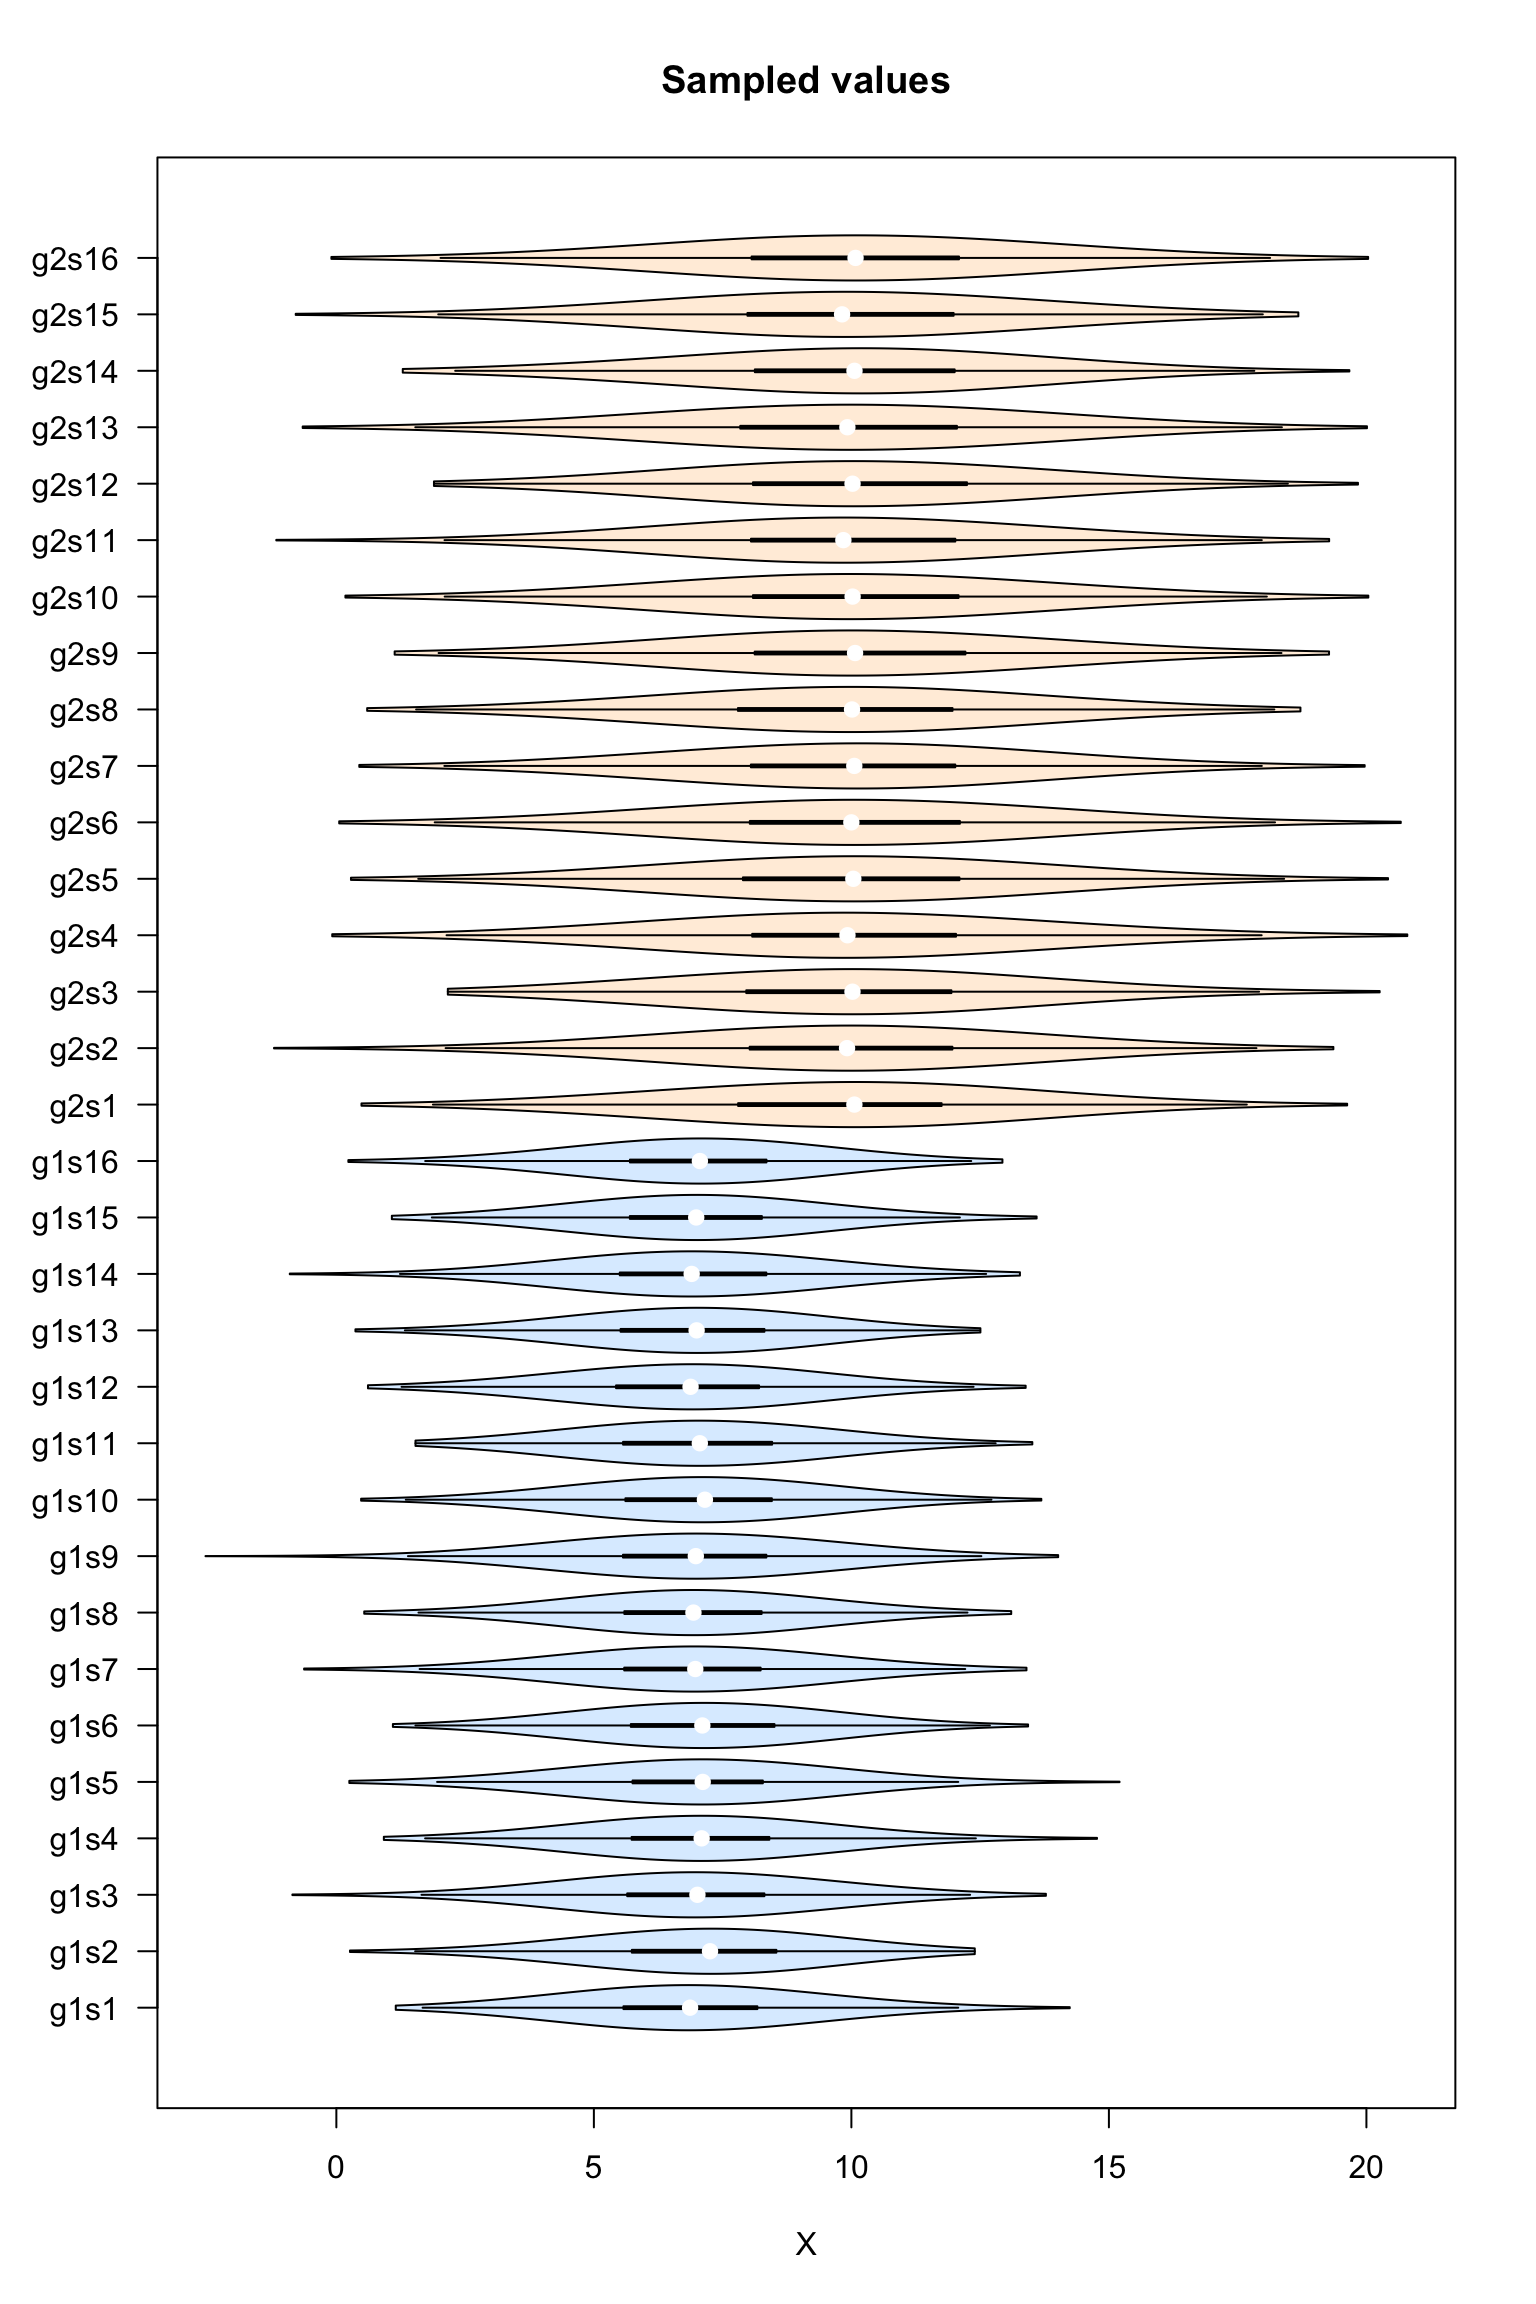 Violin plot of the sampled values